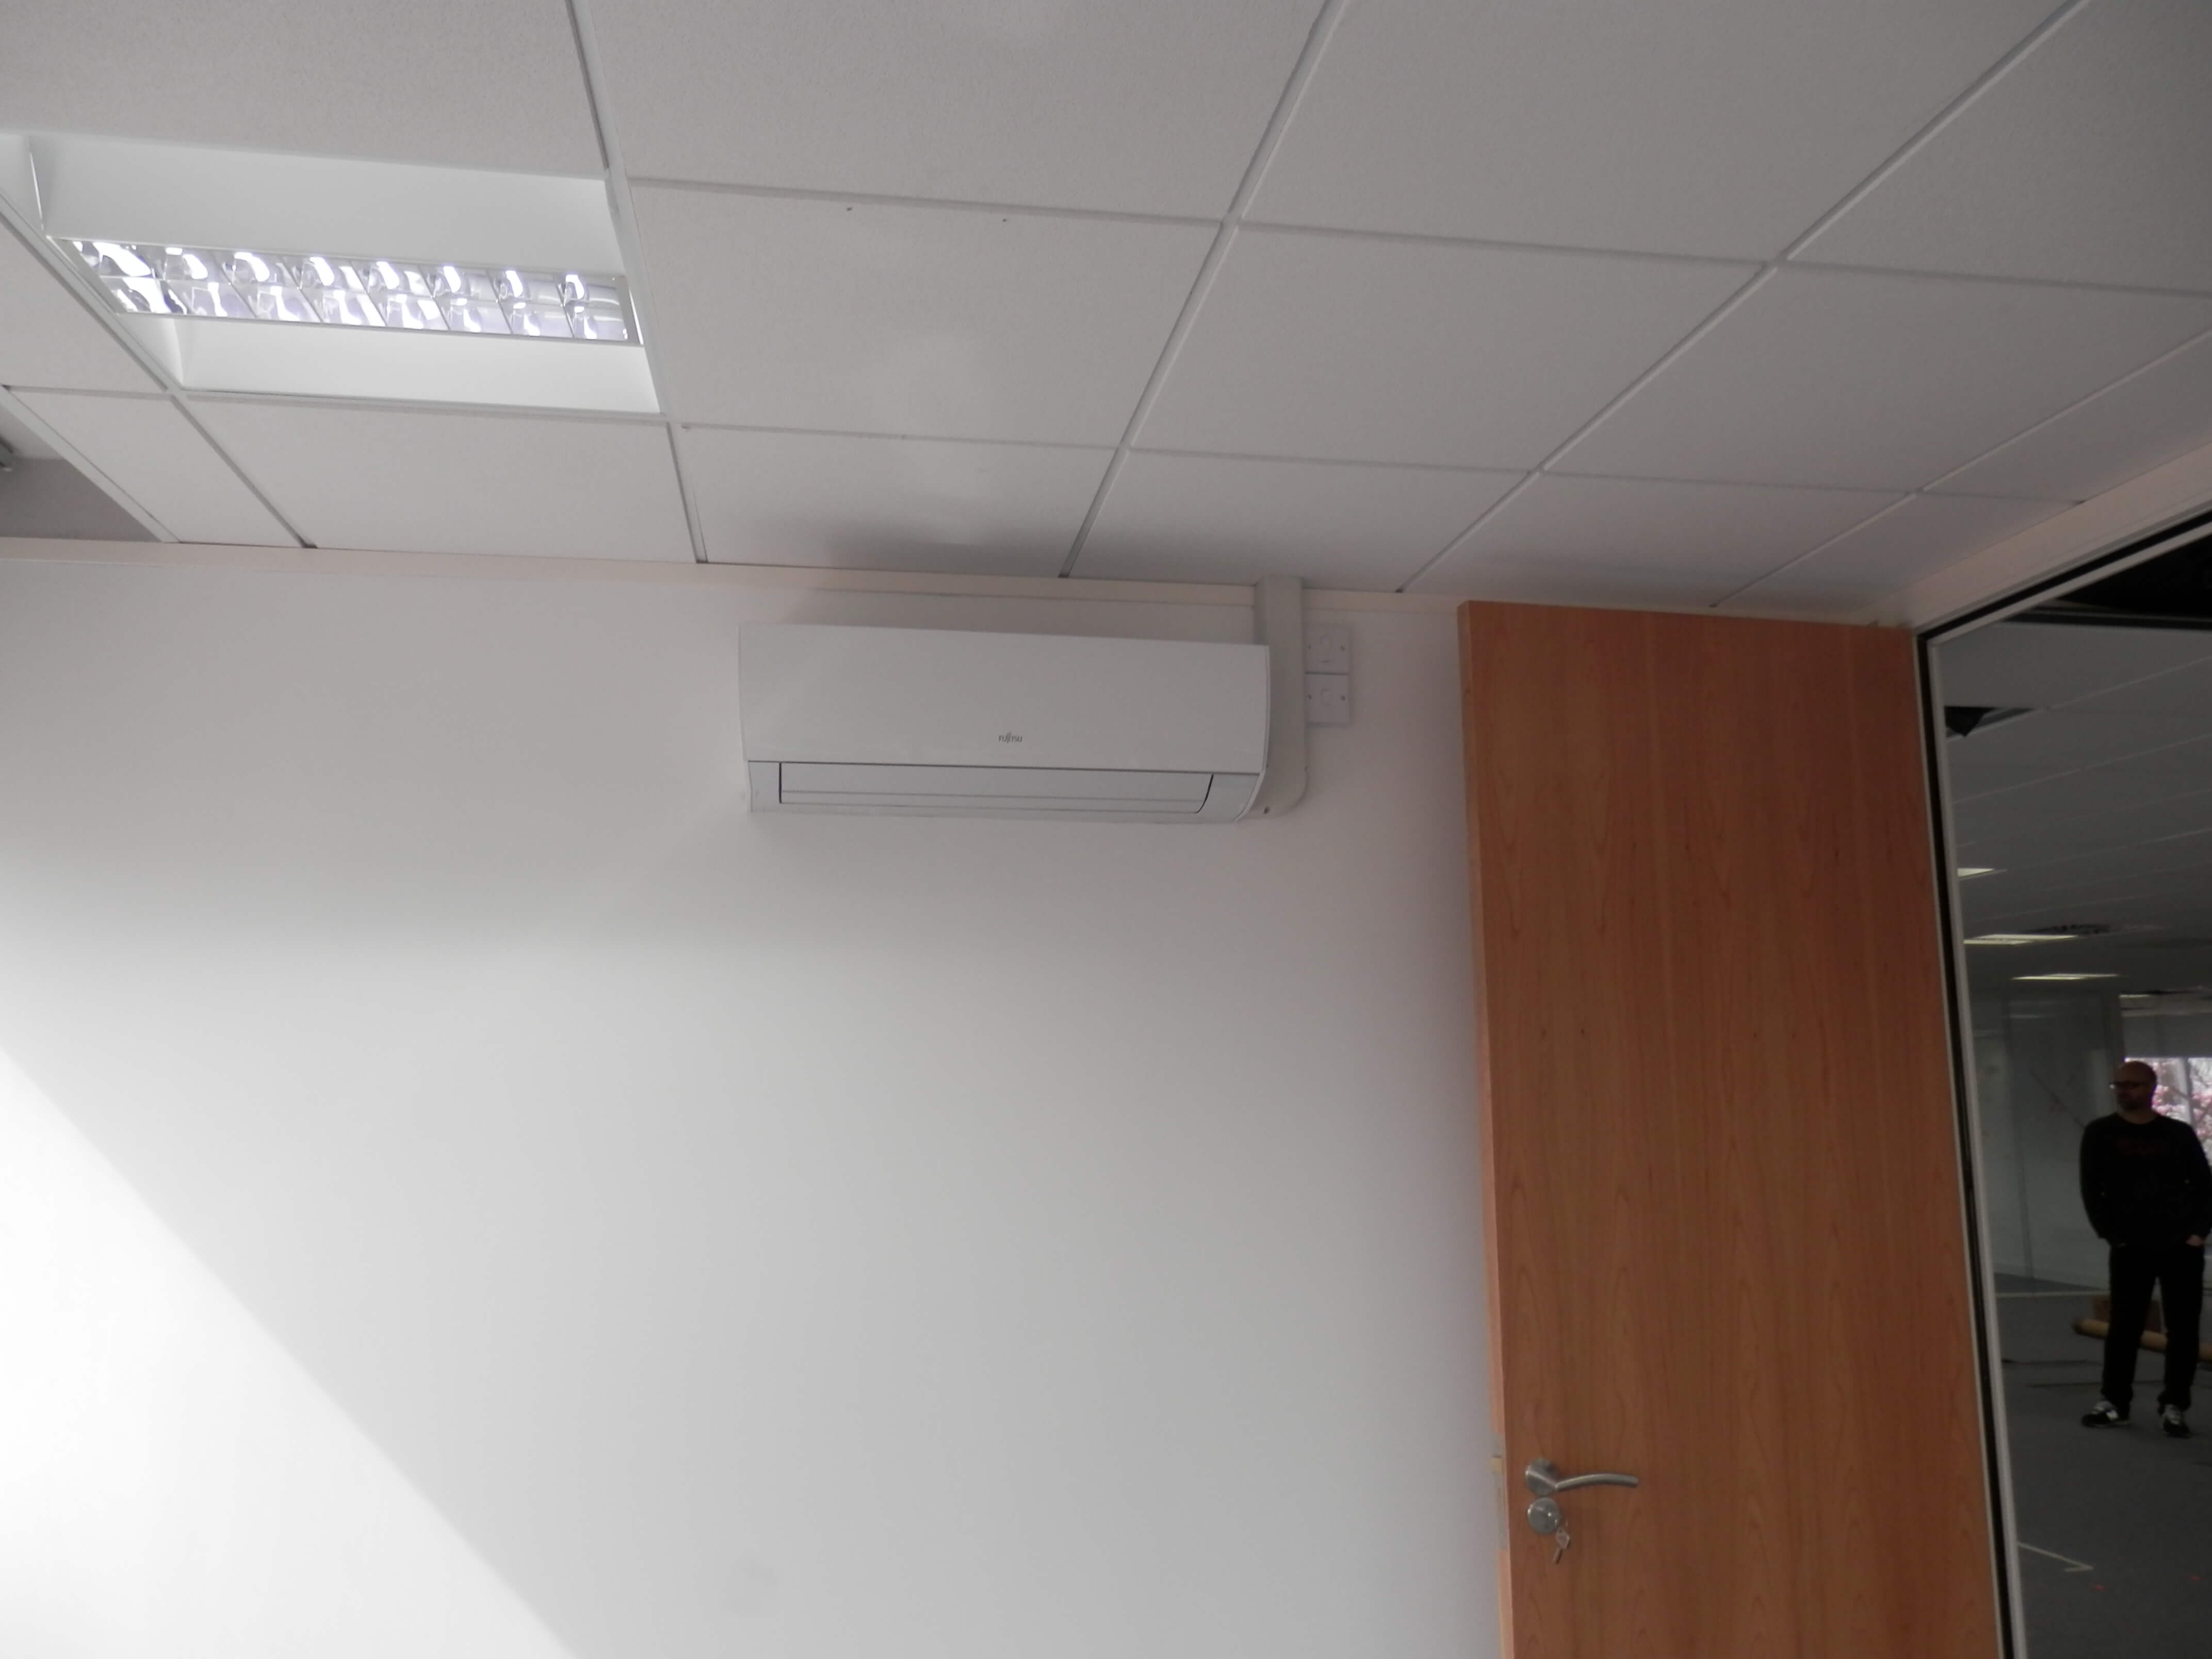 Fujitsu air conditioning unit finished installation.